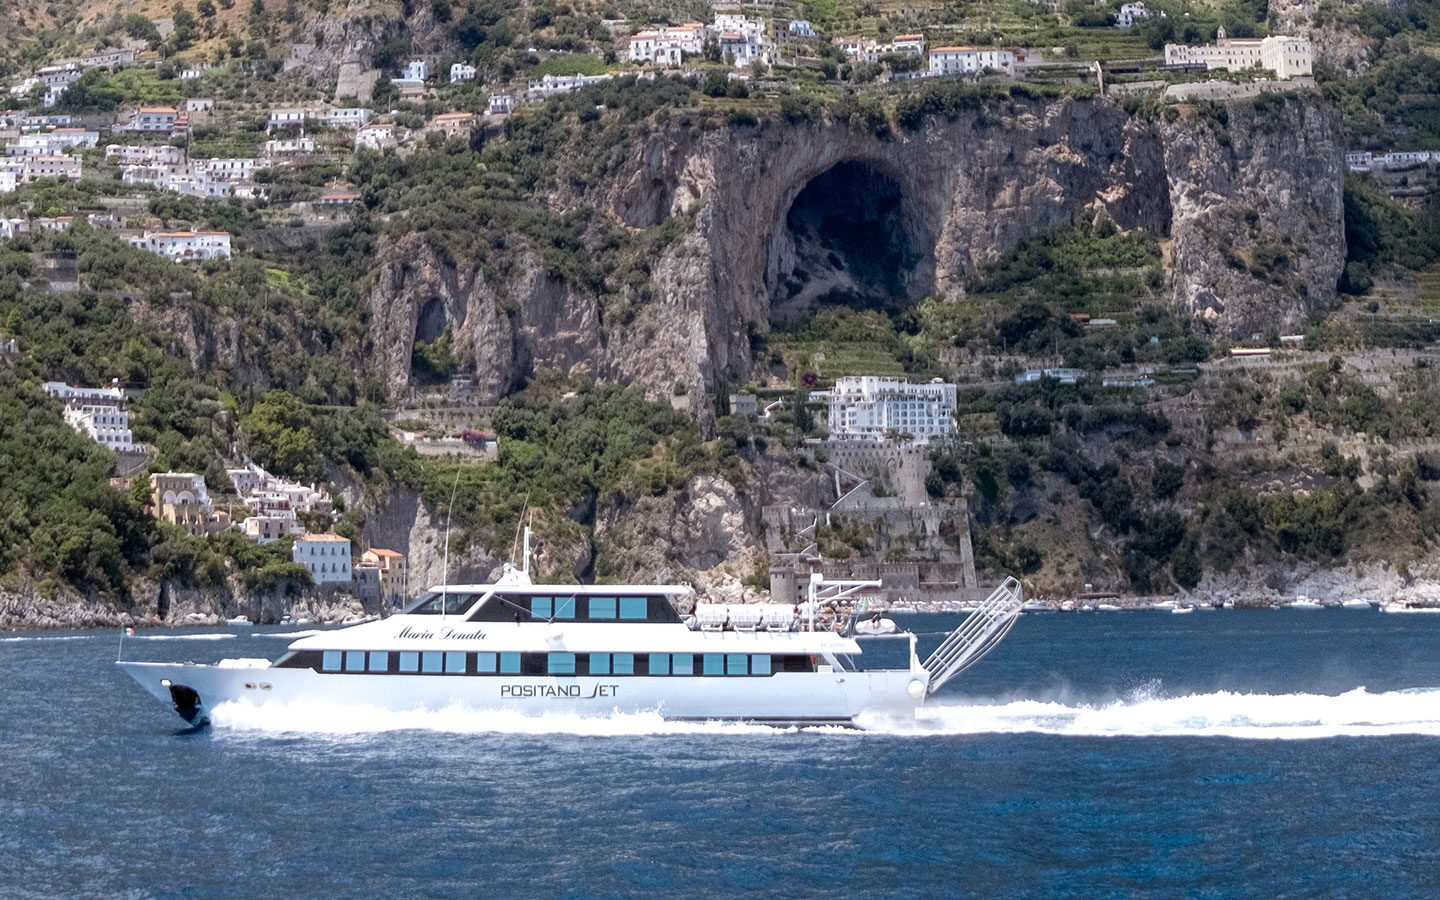 Positano Jet Ferry in the Amalfi Coast